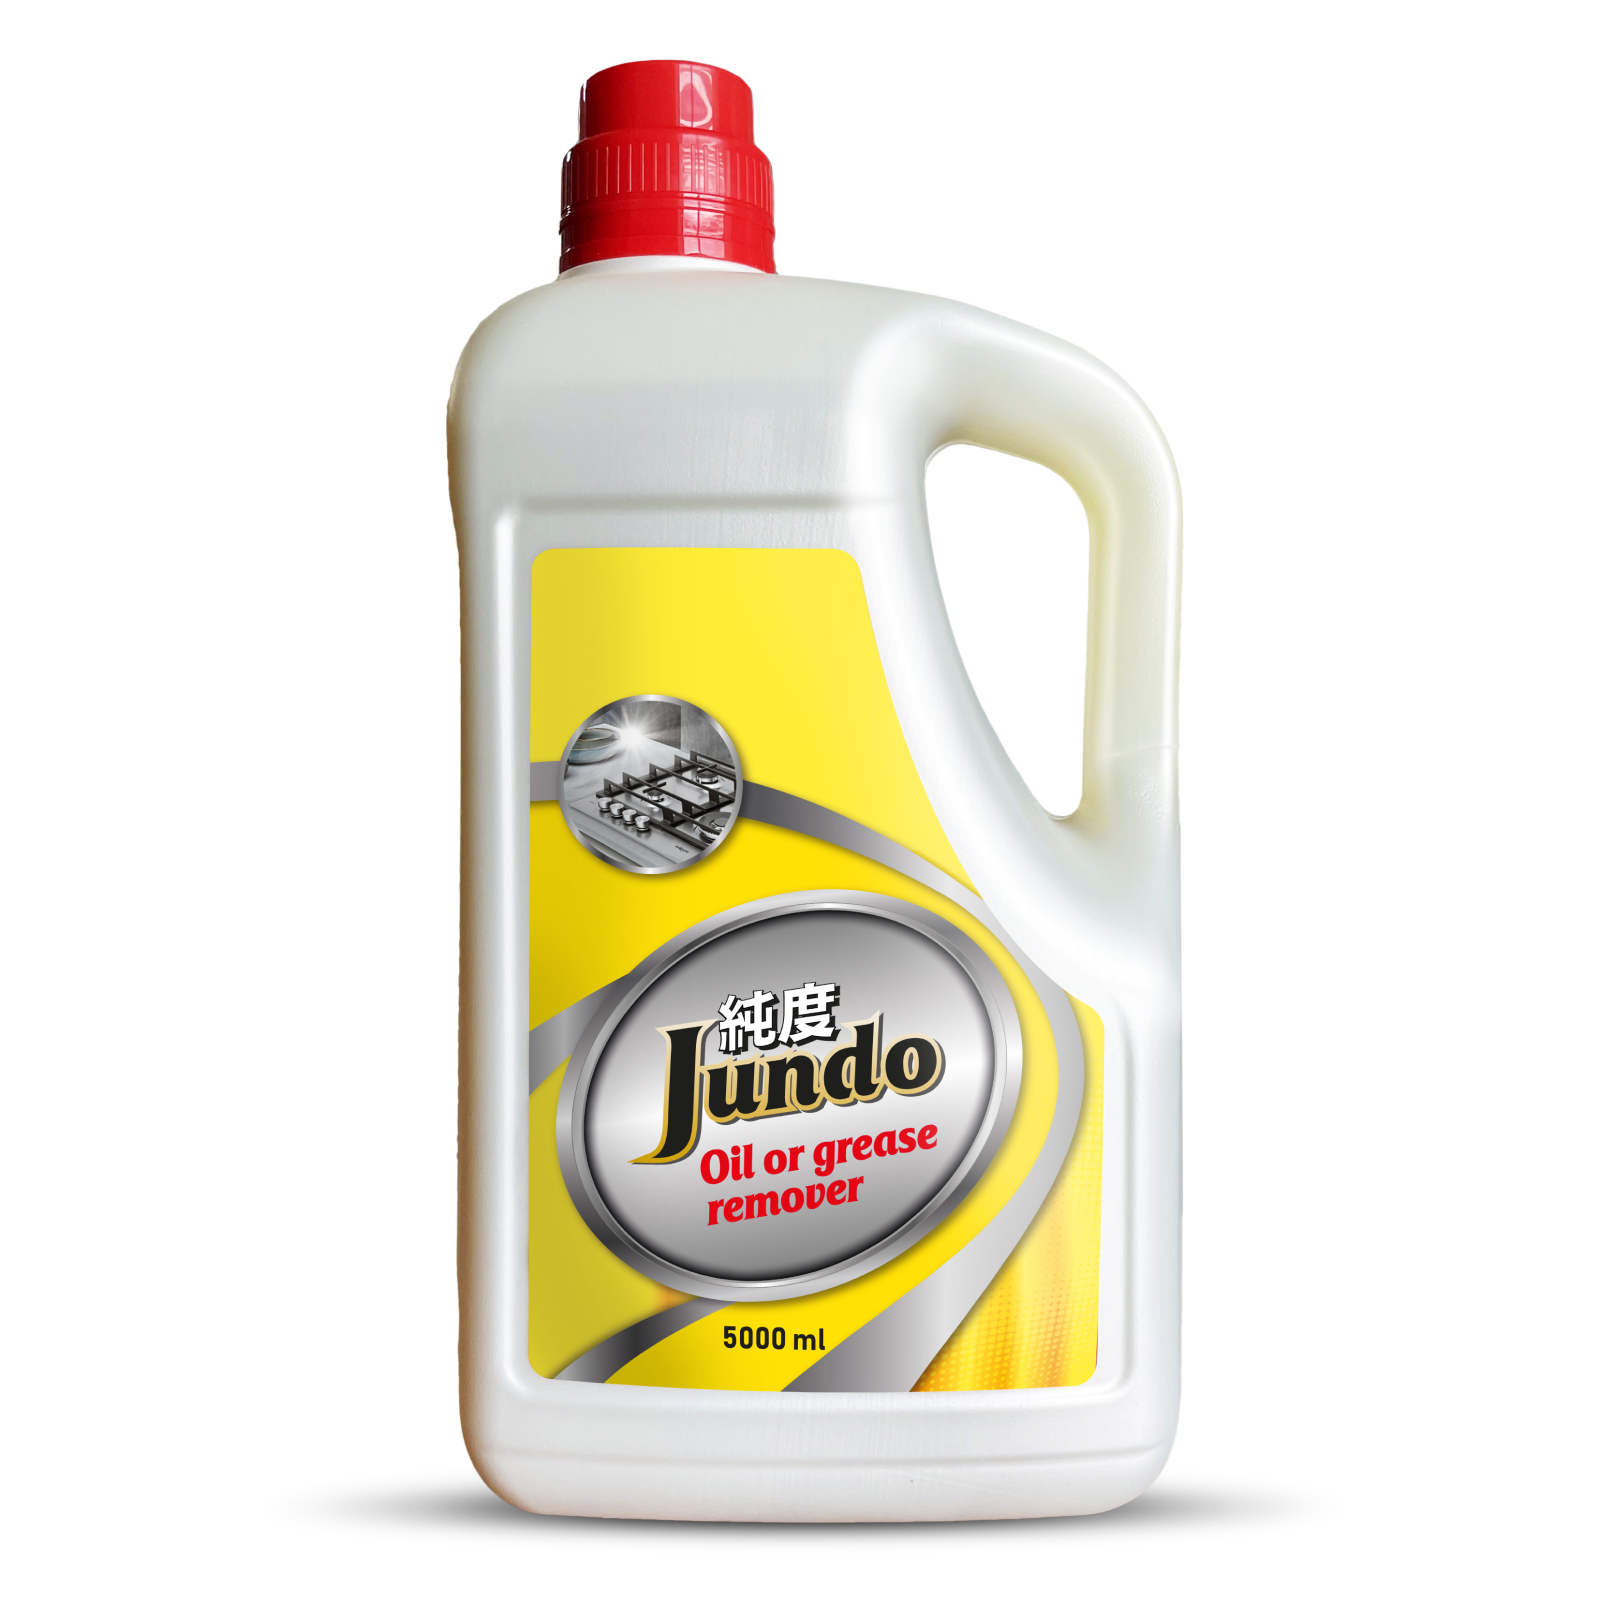 Жироудалитель концентрированный Jundo Oil or grease remover 5 л